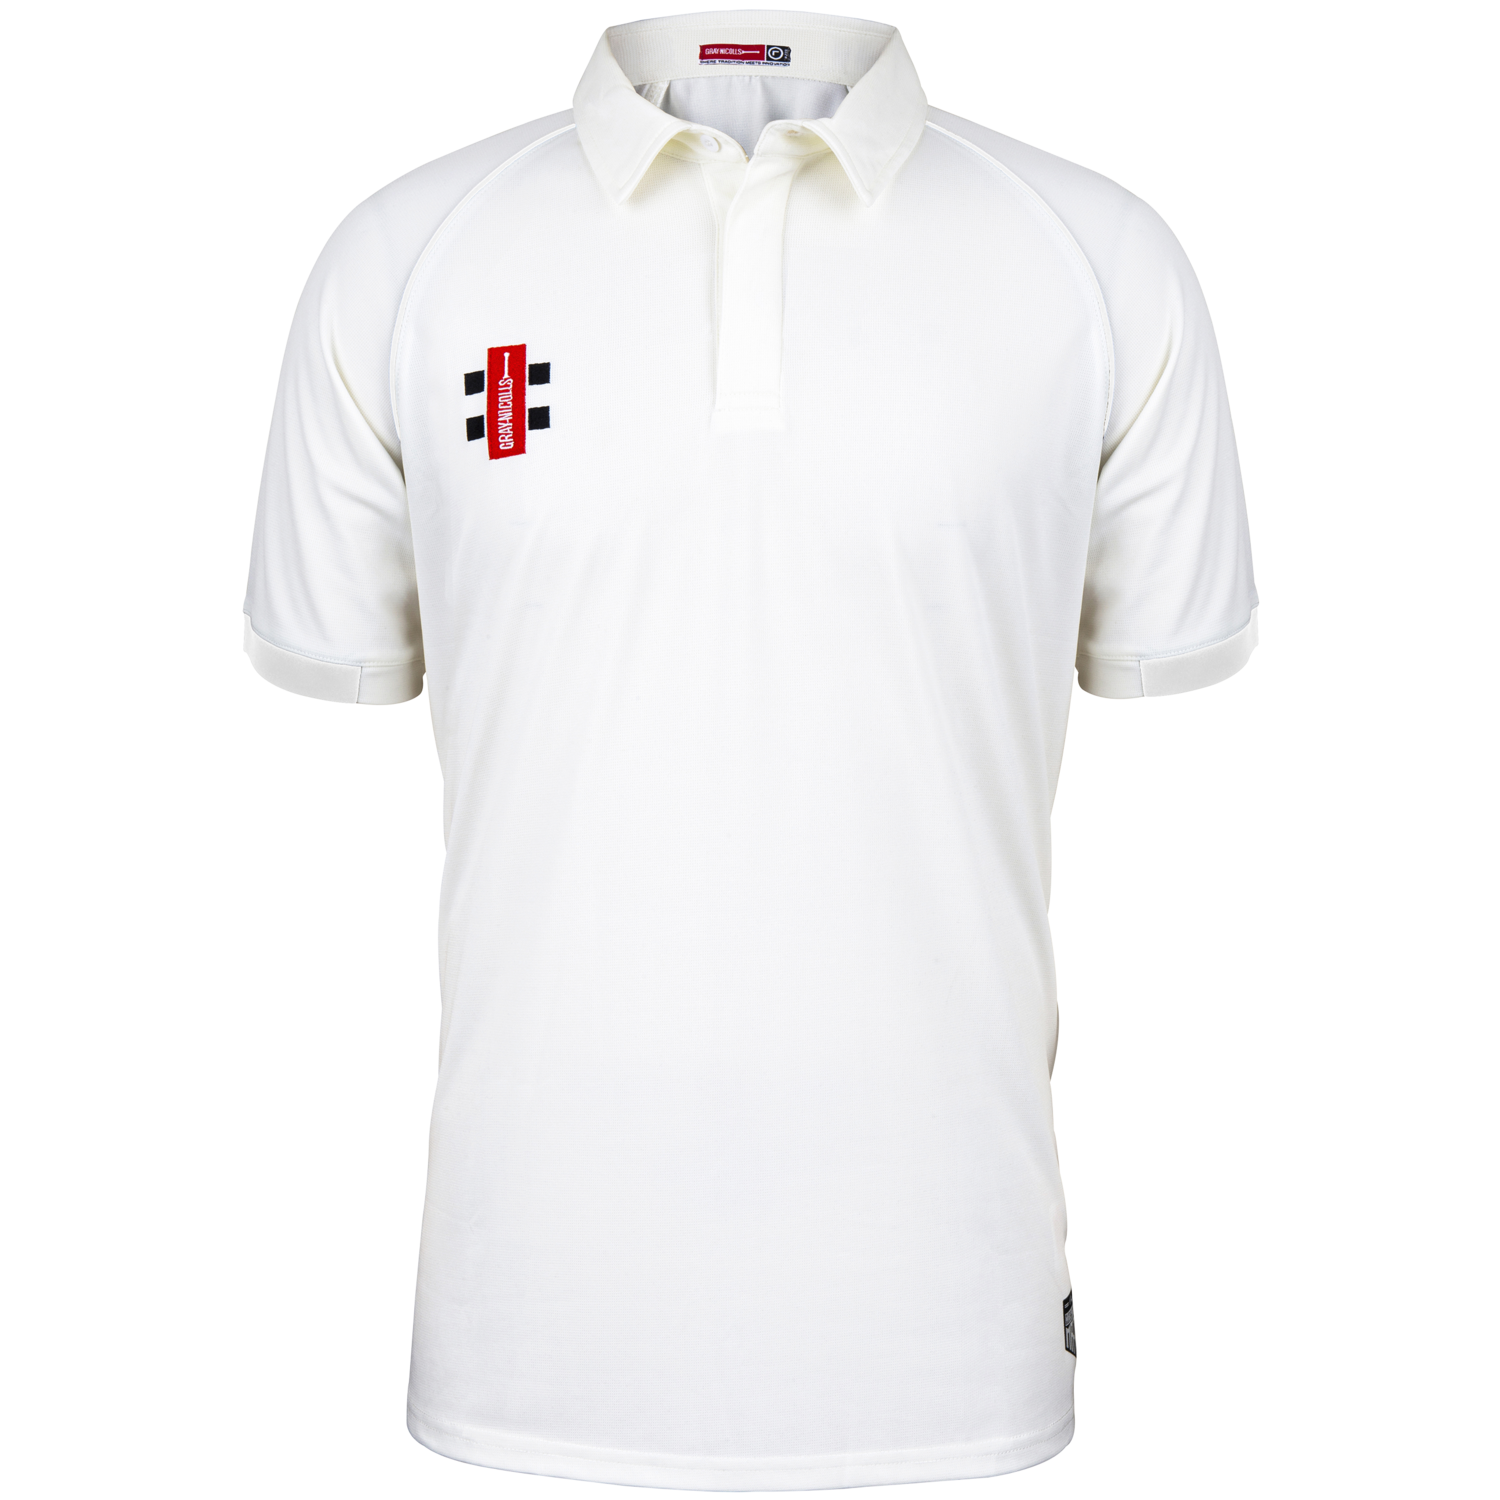 Middleton Tyas Matrix V2 Short Sleeve Cricket Shirt